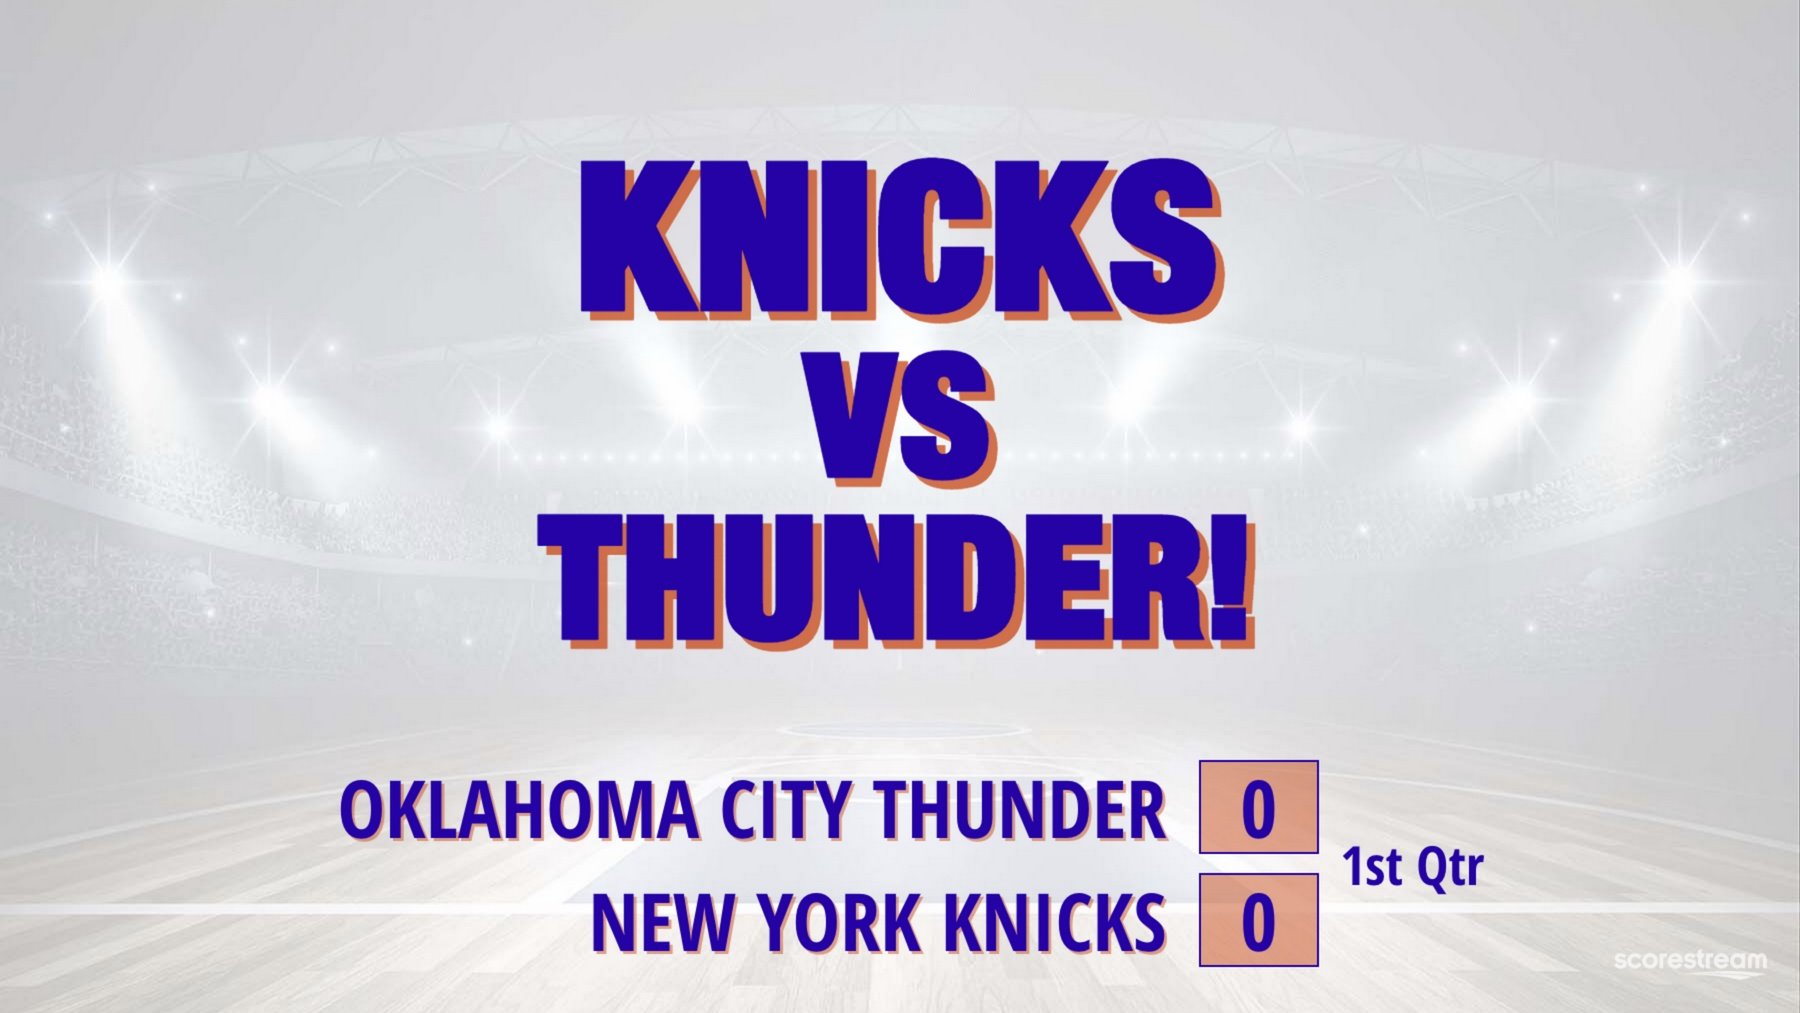 How to Watch New York Knicks vs Oklahoma City Thunder on Nov. 13?